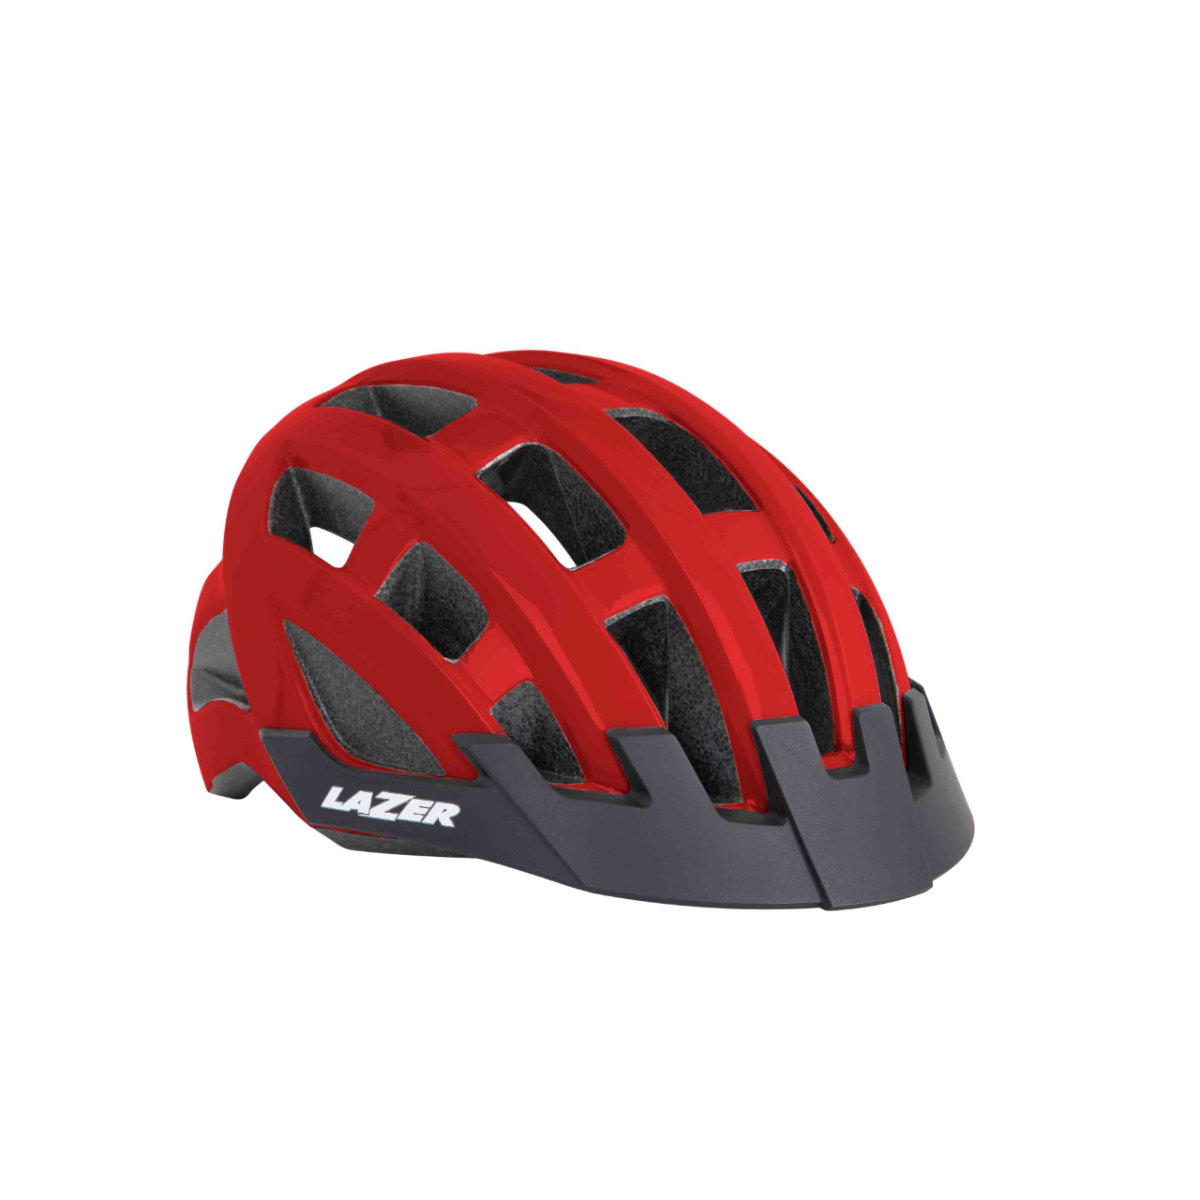 Helmet Lazer Compact Red Uni